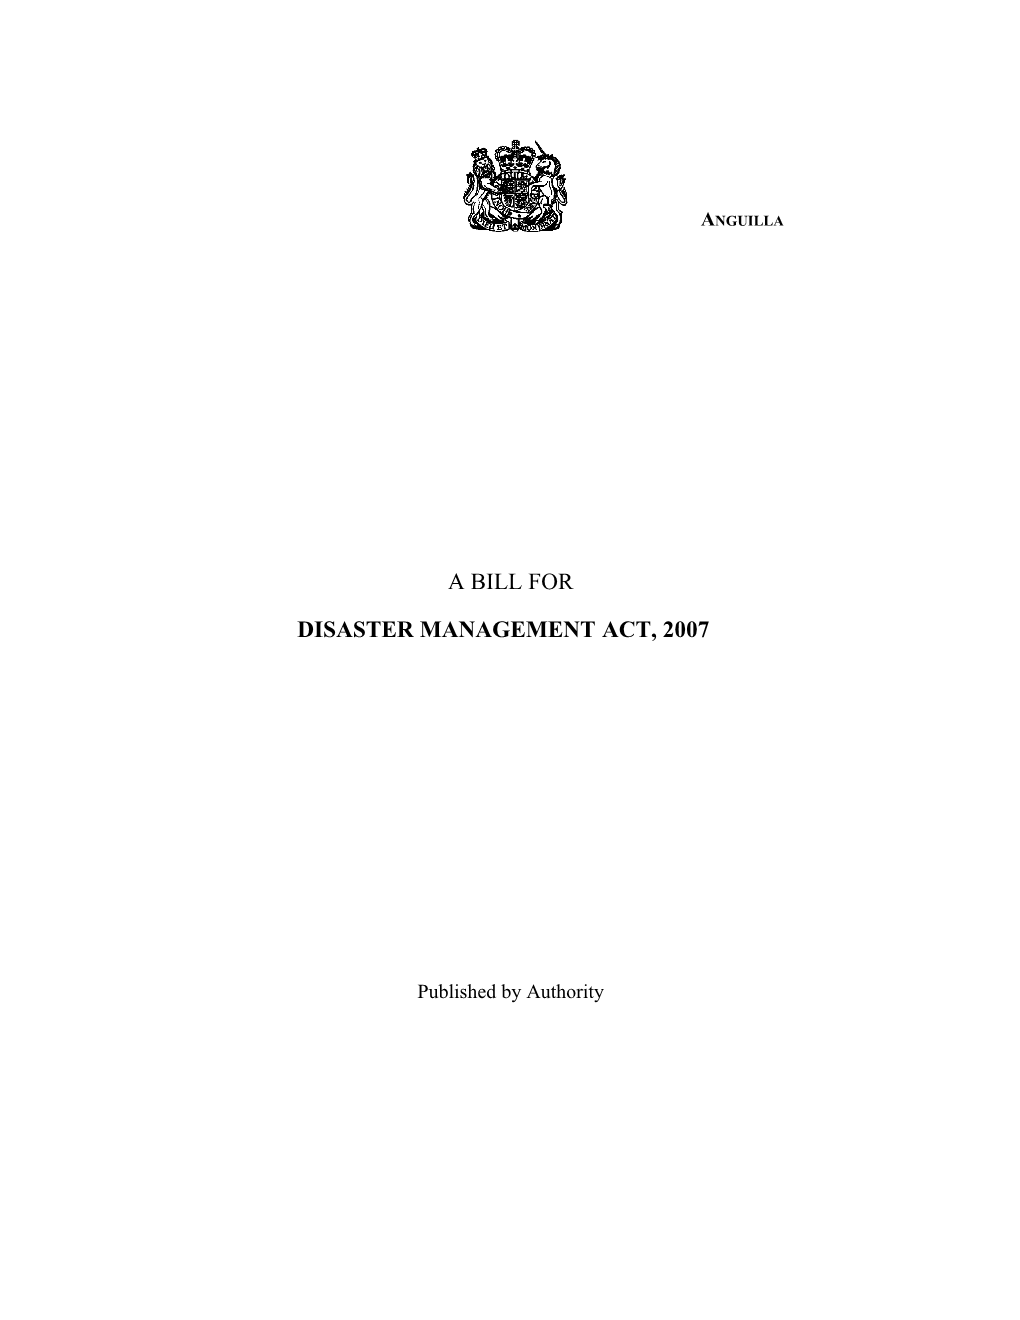 Anguilla Disaster Management Act, 2007 Bill